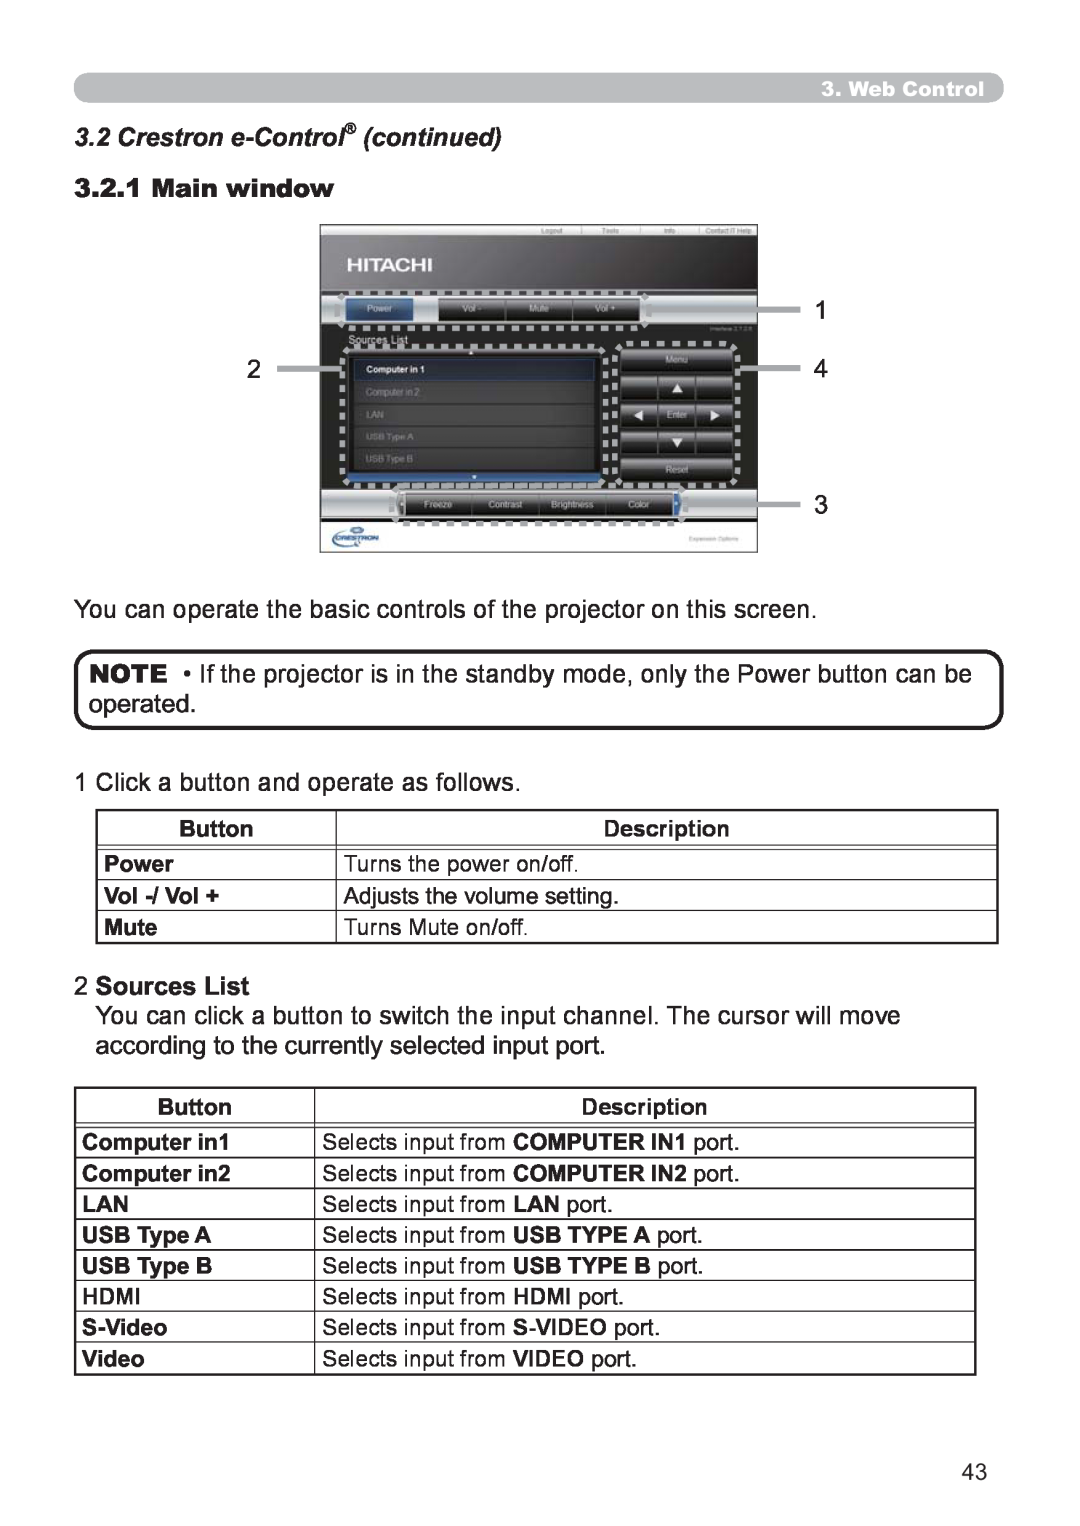 Hitachi CP-X2521WN, CP-X3021WN user manual Crestron e-Control continued, Main window, Sources List 